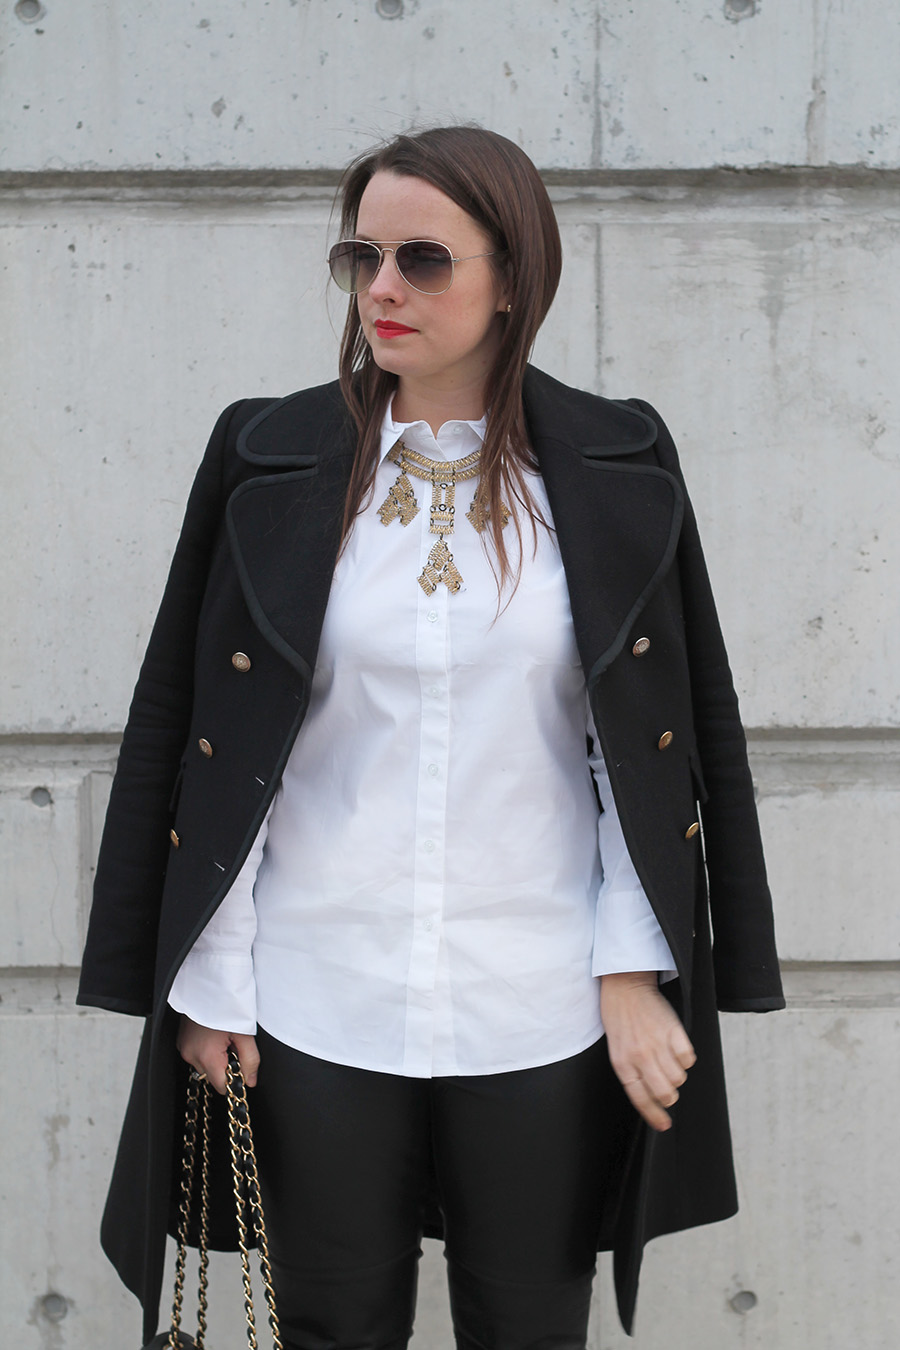 White Button Up Shirt, Black Wool Coat, Brass Necklace, Aviator Sunglasses, Bright Lipstick